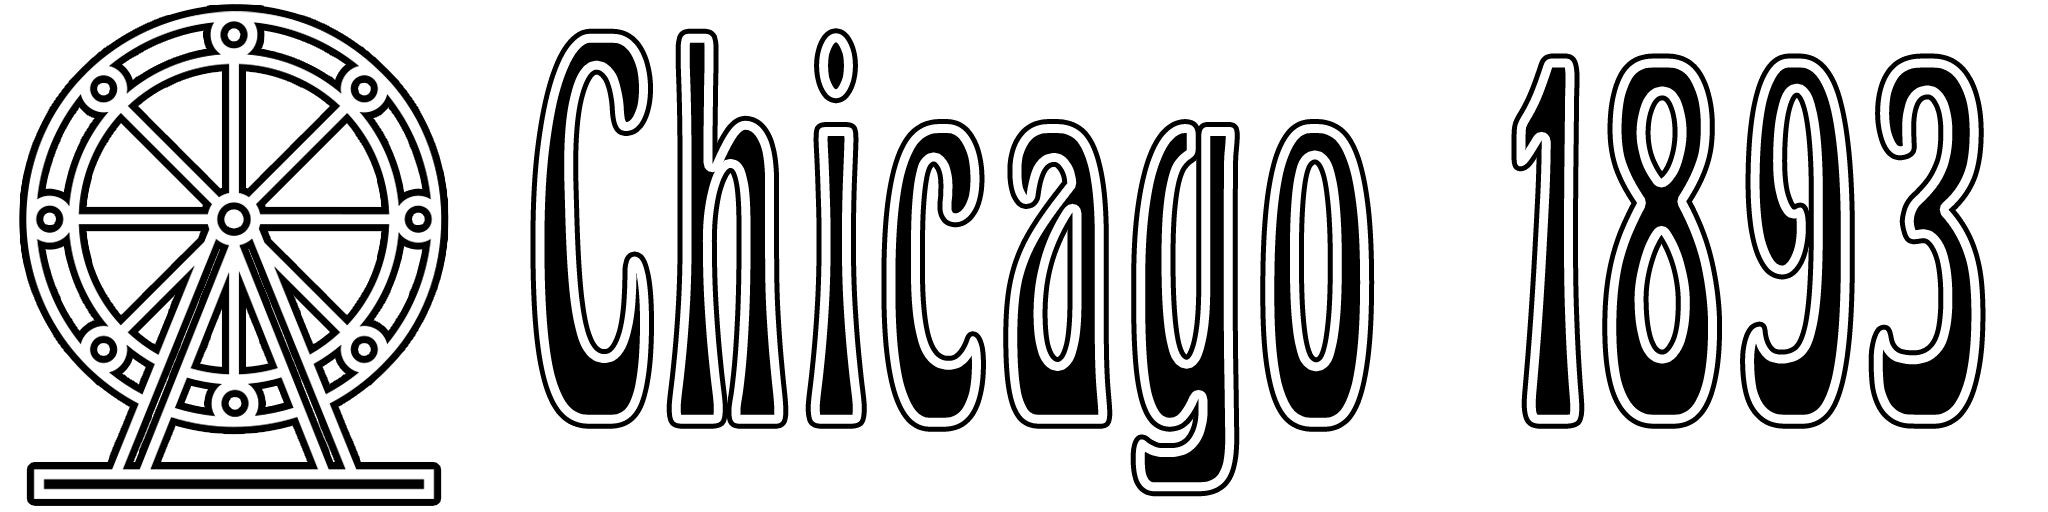 Chicago 1893